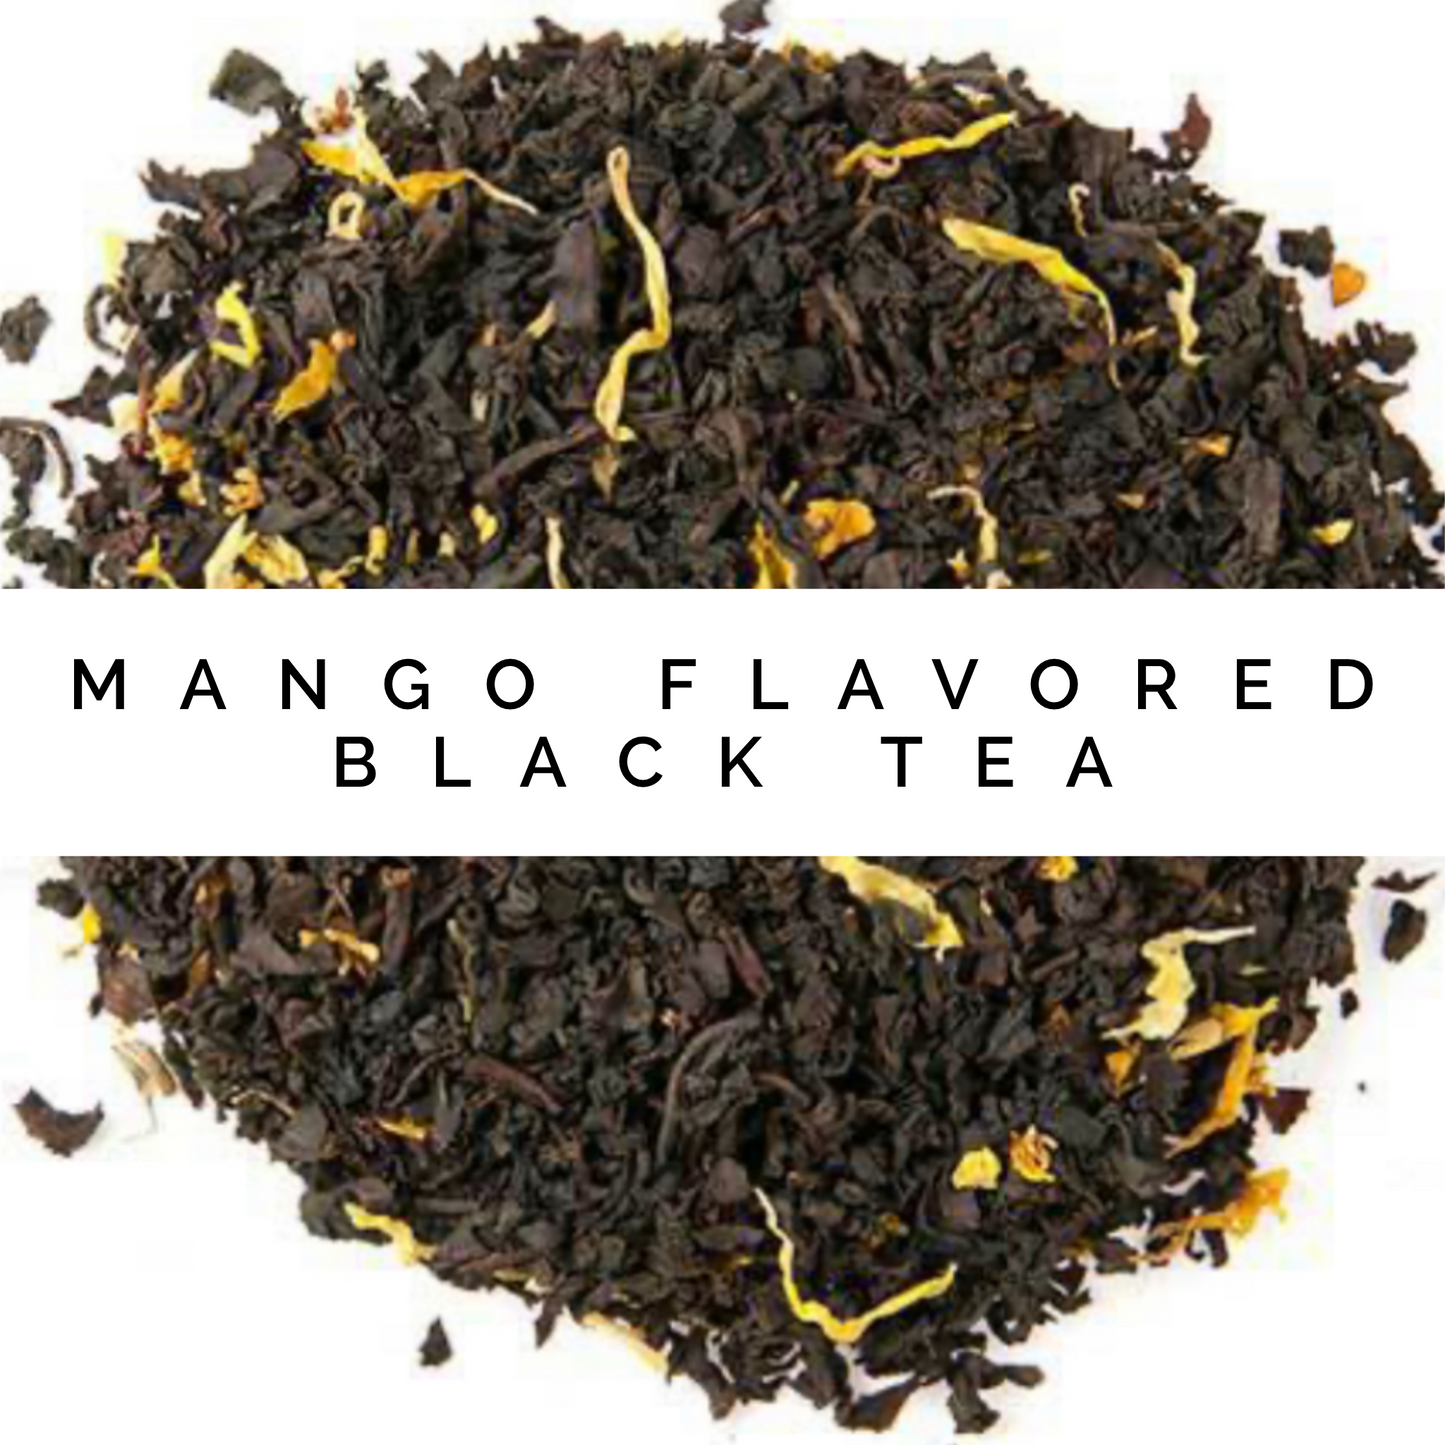 Mango flavored Black Tea